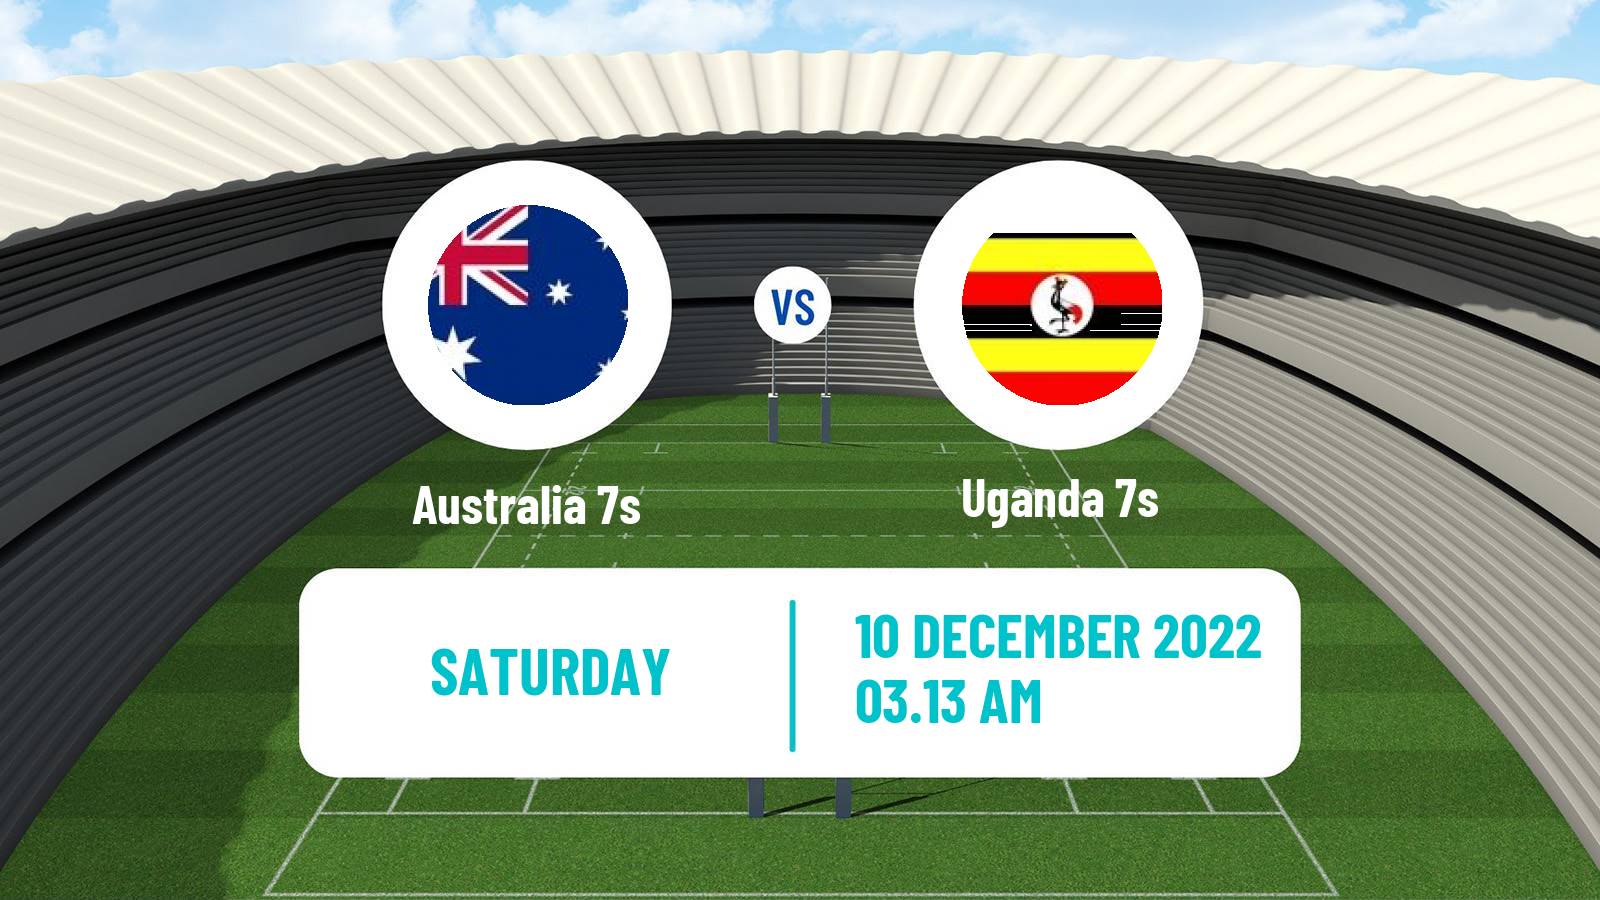 Rugby union Sevens World Series - South Africa Australia 7s - Uganda 7s